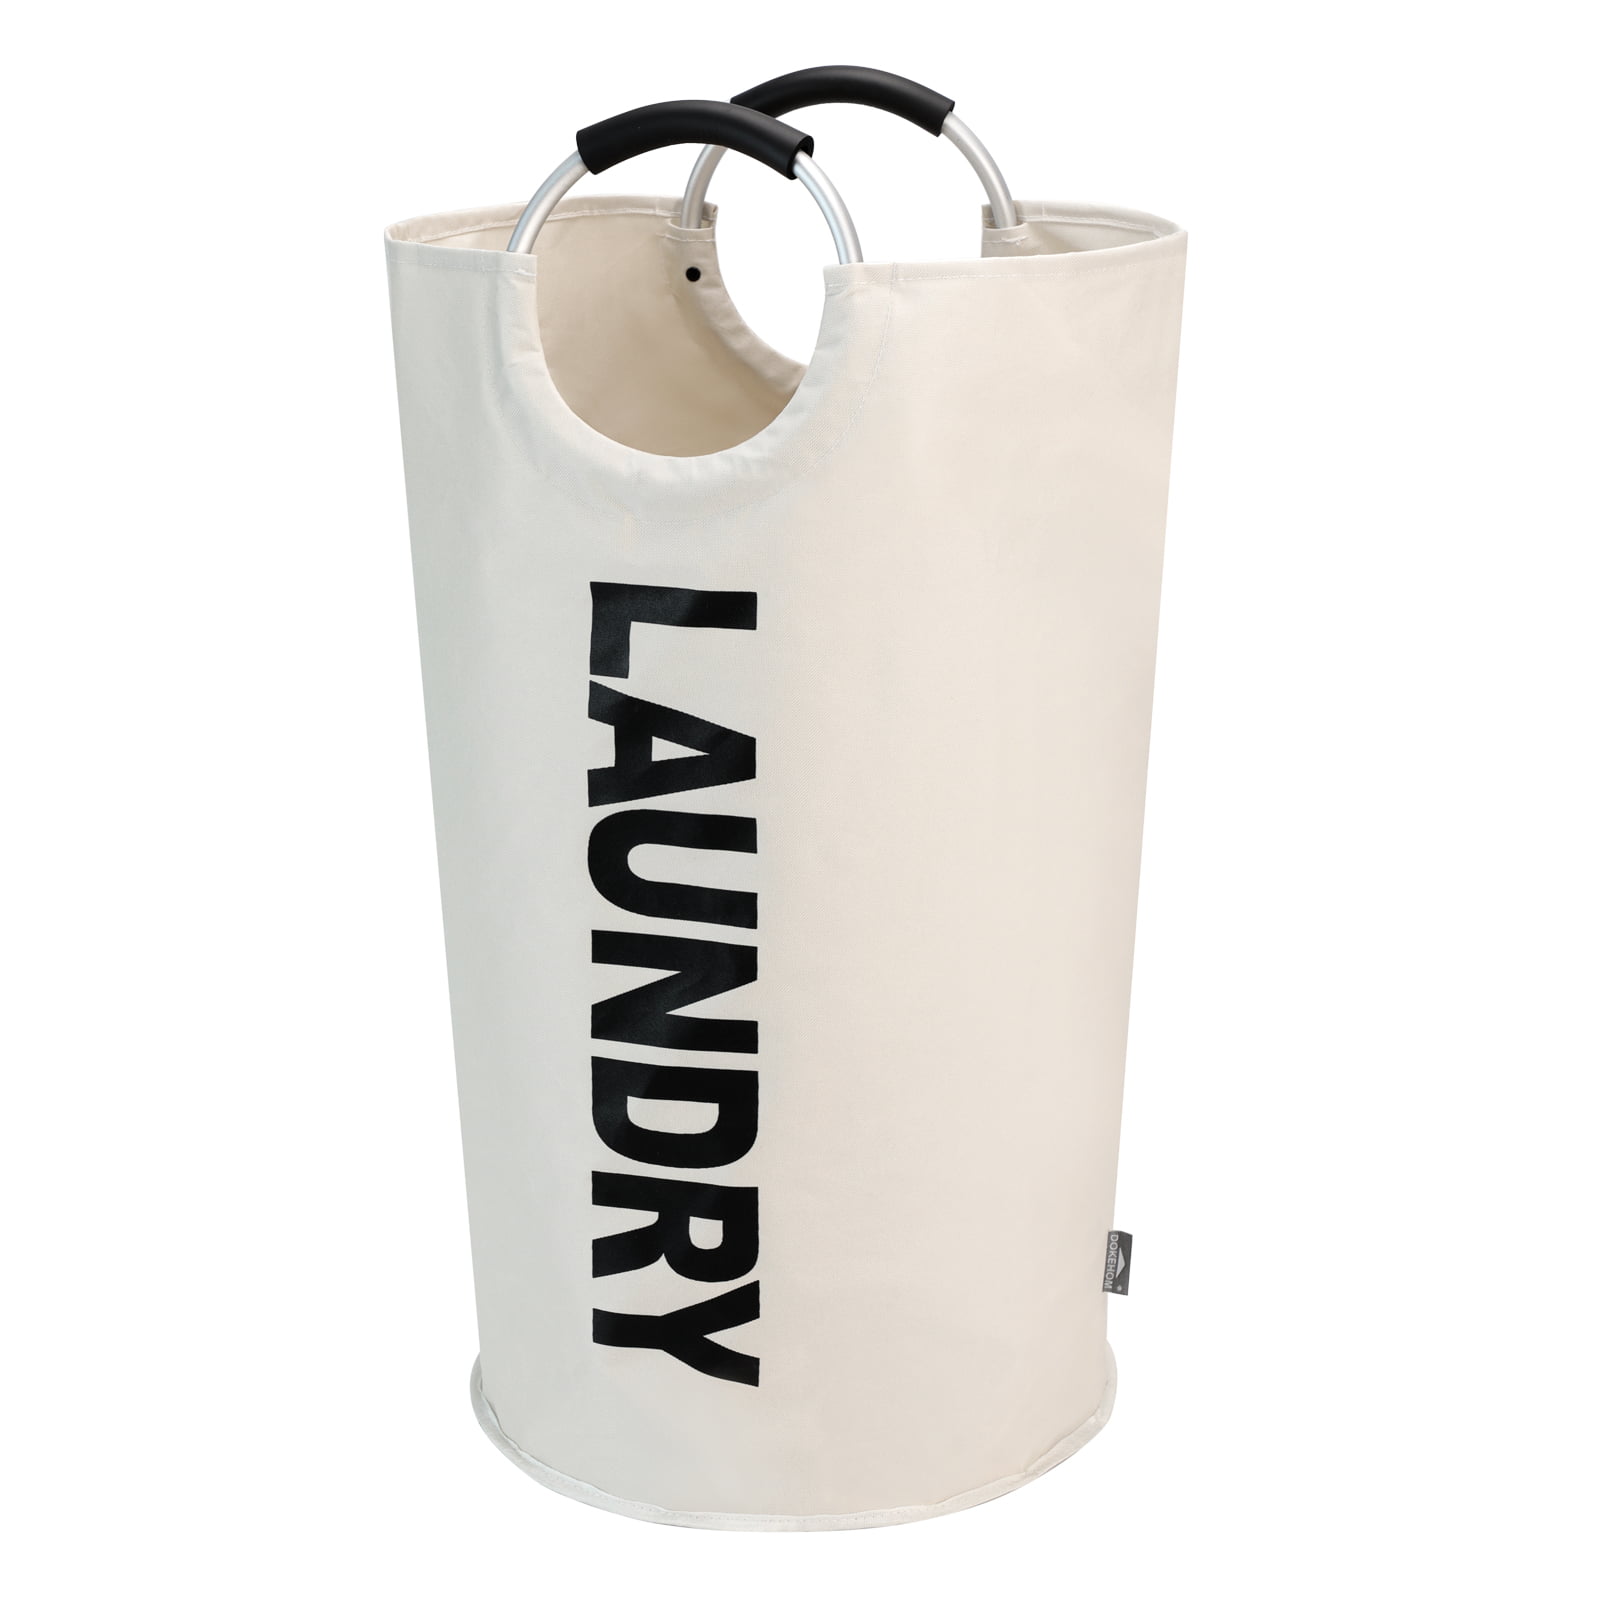 Bin Deluxe Laundry Bag Baskets With Aluminium Handle 72 X 38 Cm 